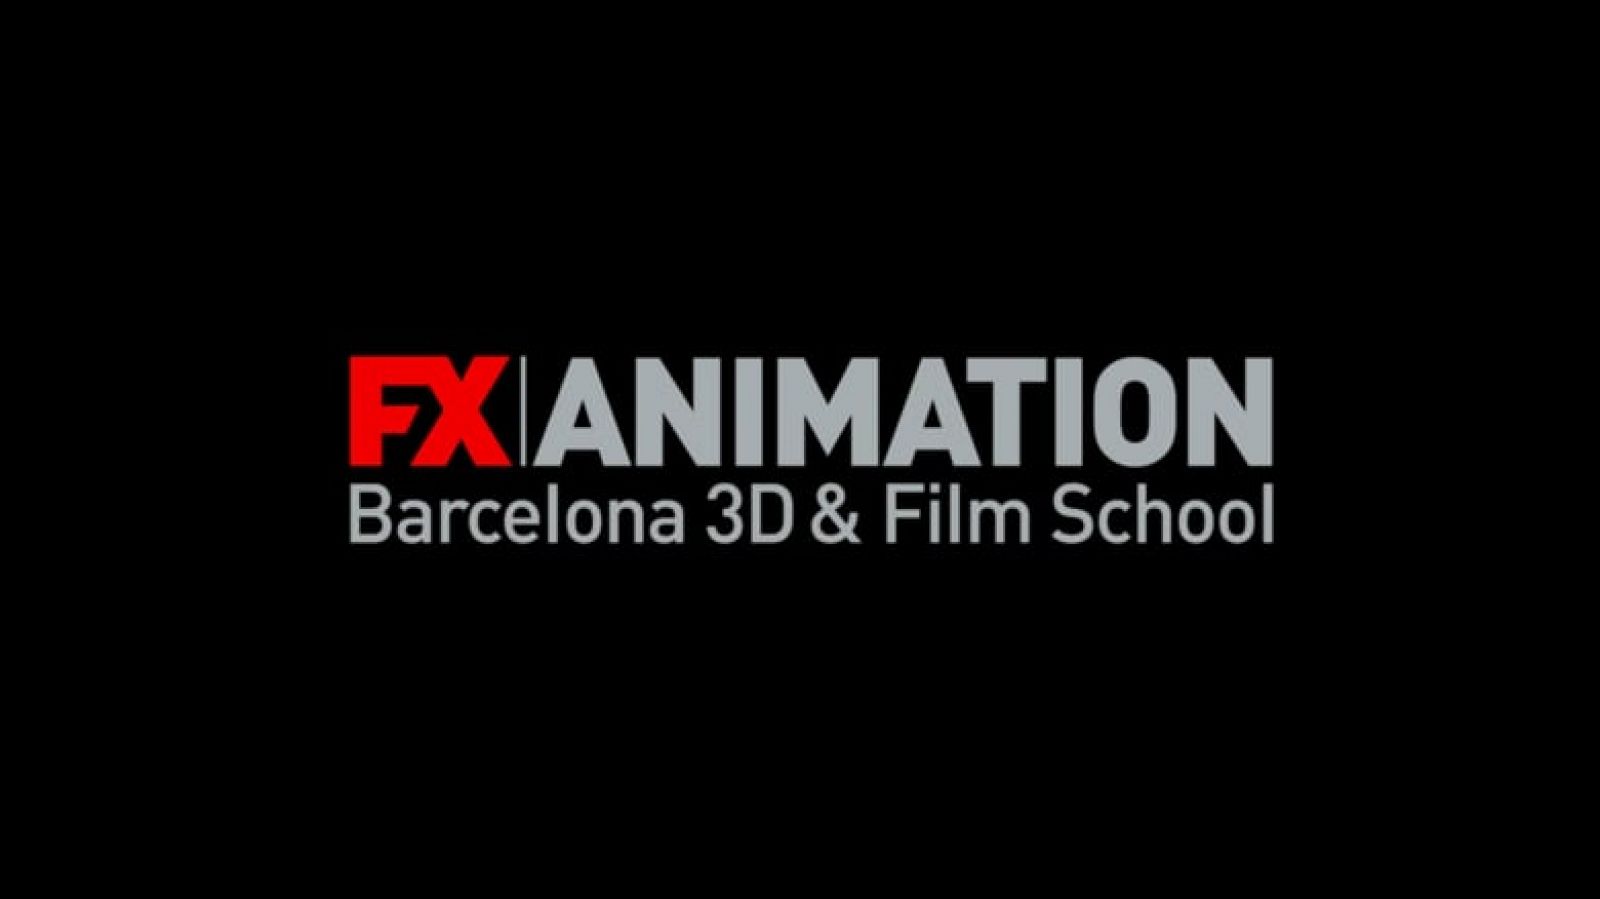 FX Animation